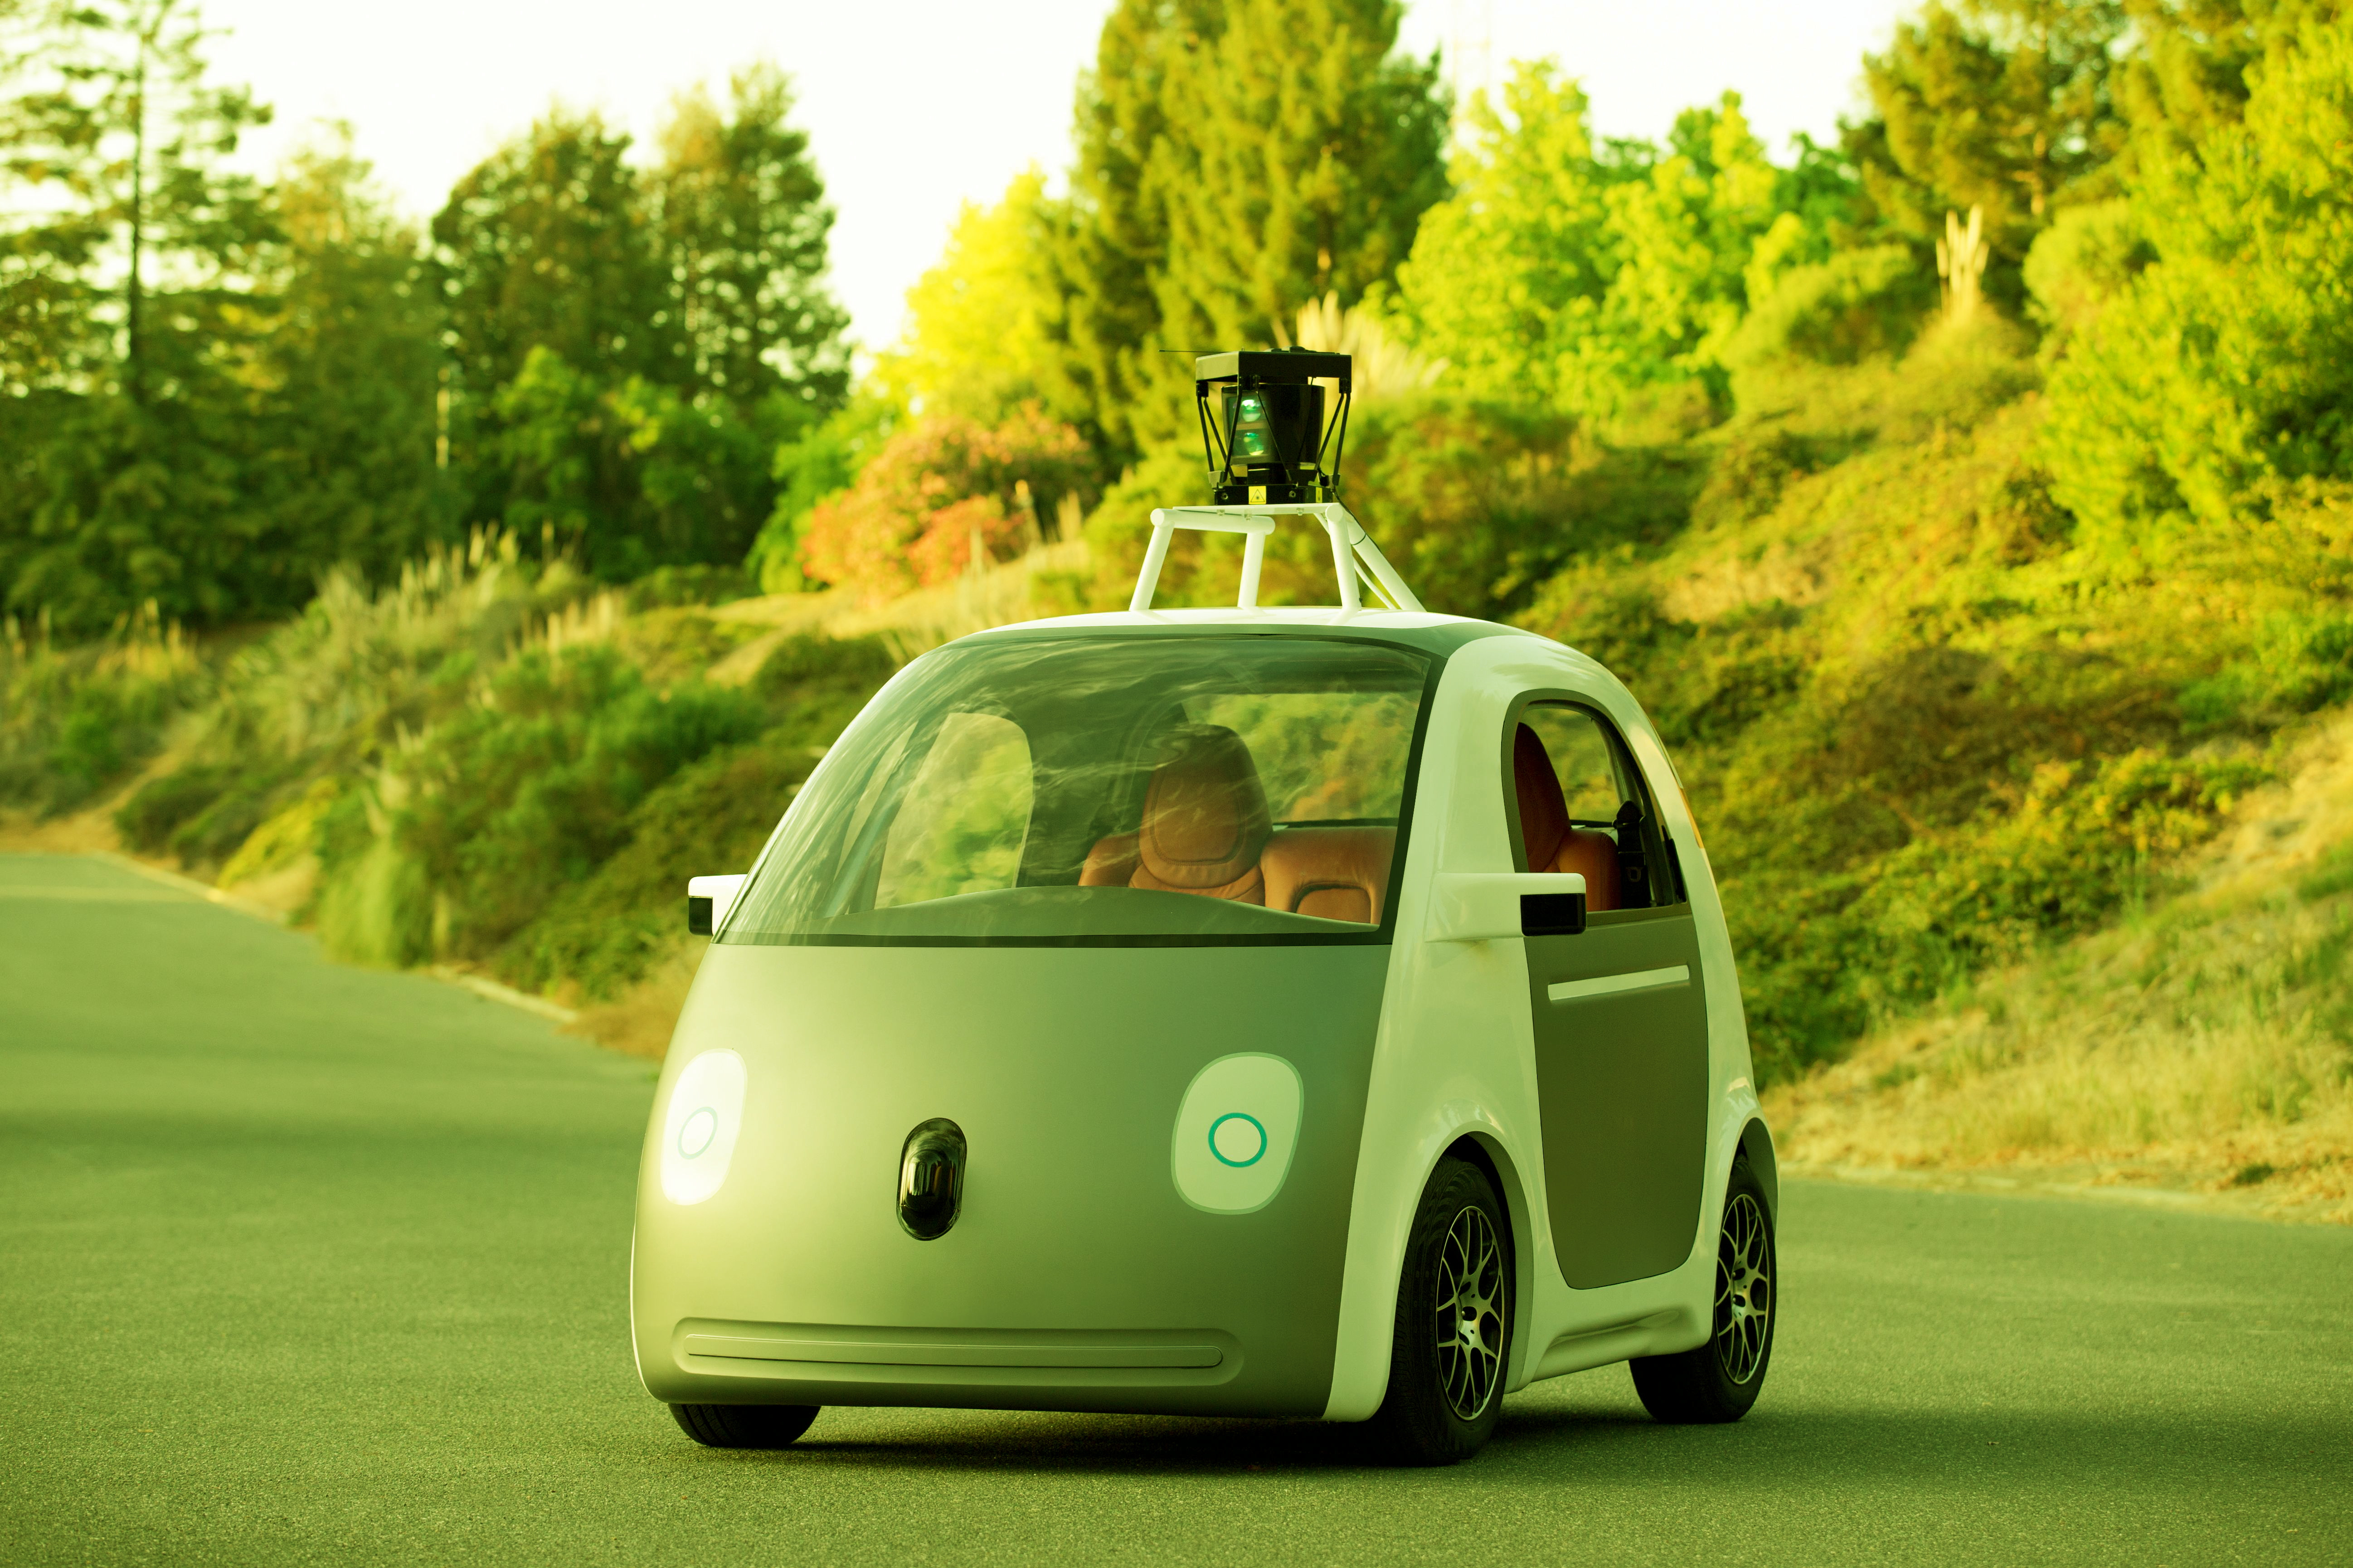 BBC Conversation: How Green is Google’s Driverless Car?